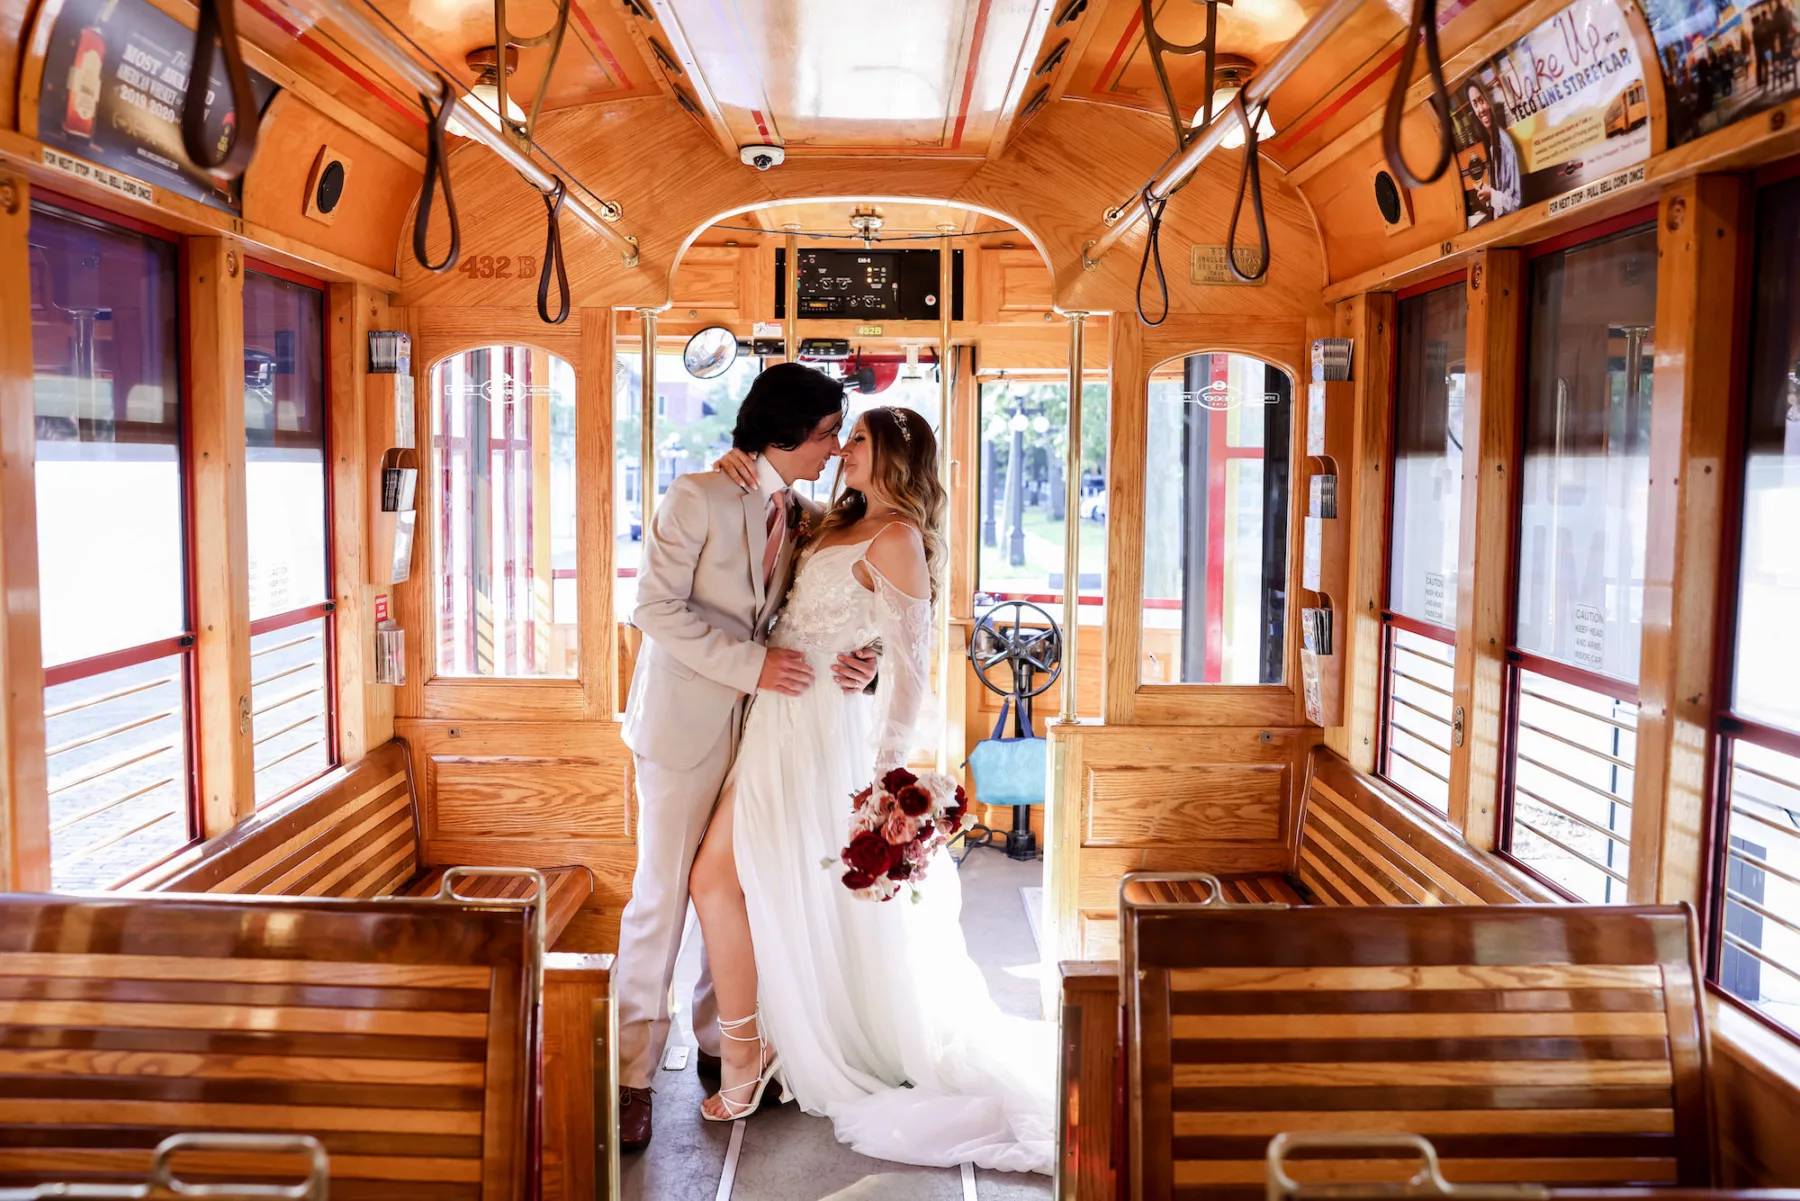 Bride and Groom Trolley Ride Transportation Ideas | Tampa Bay Photographer Llifelong Photography Studio